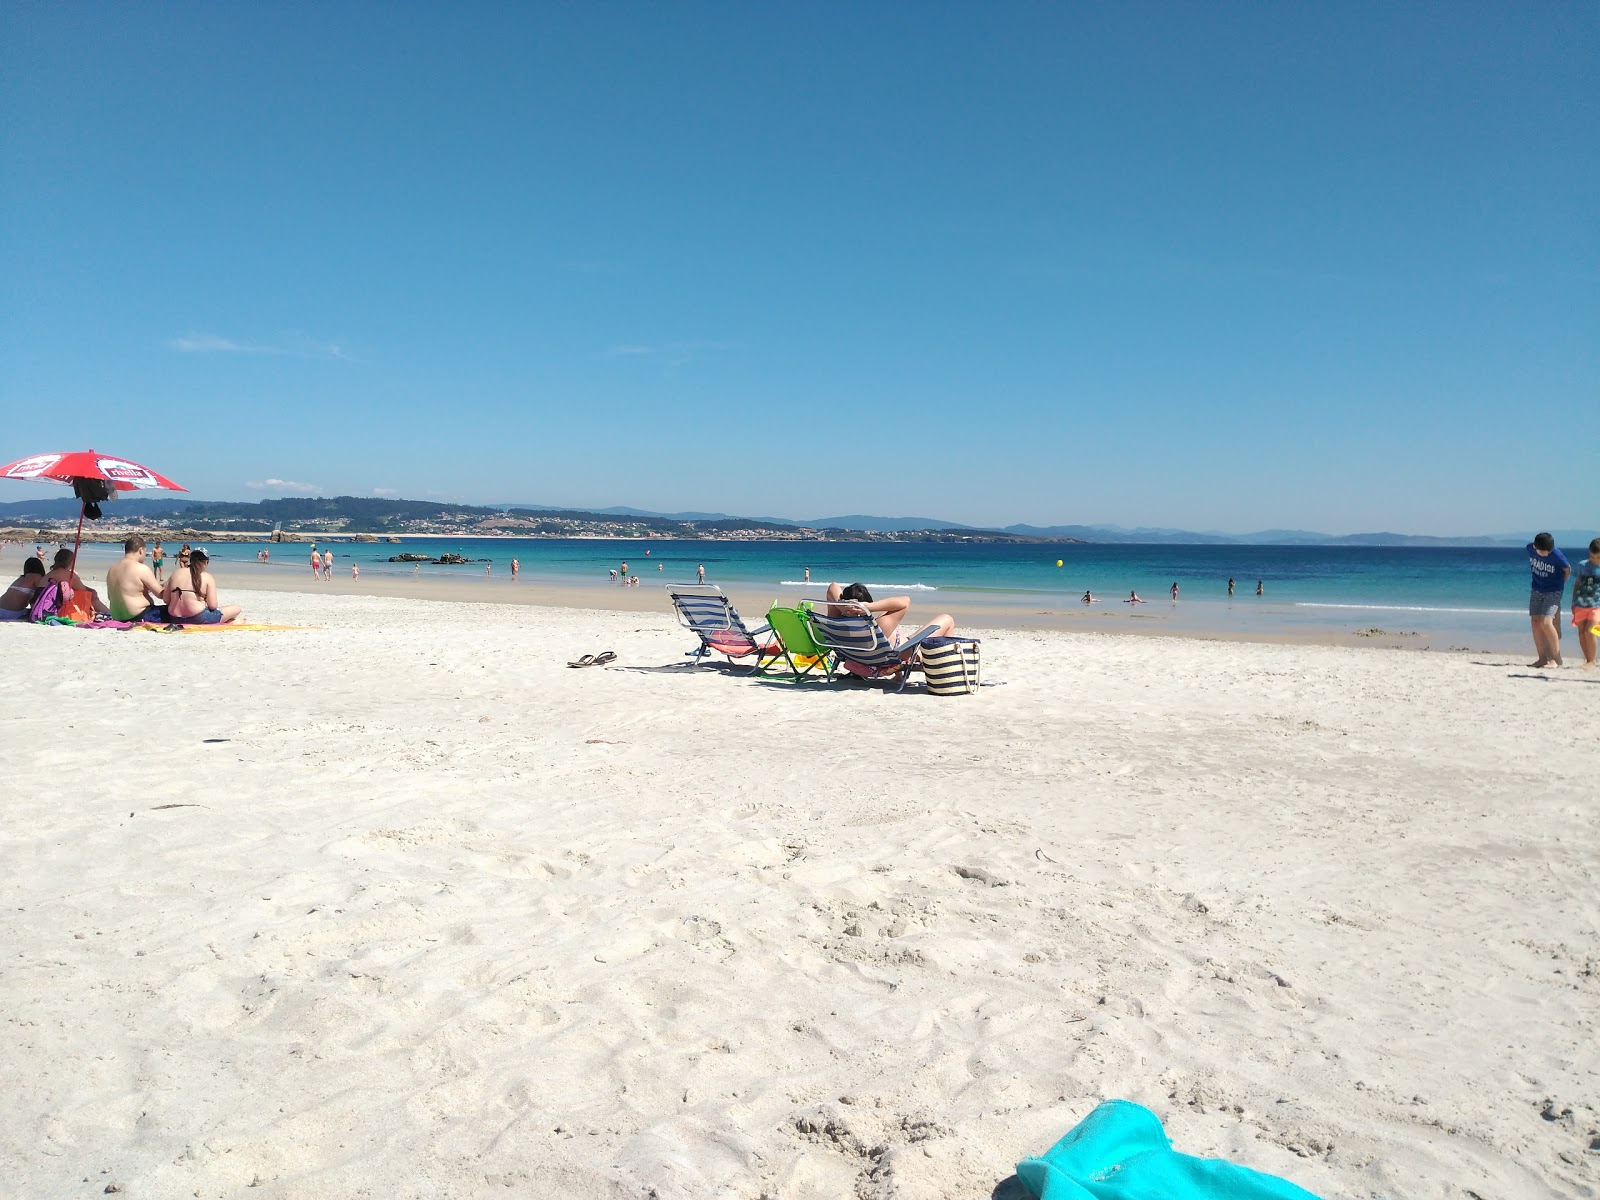 Photo of Area da Cruz beach - popular place among relax connoisseurs